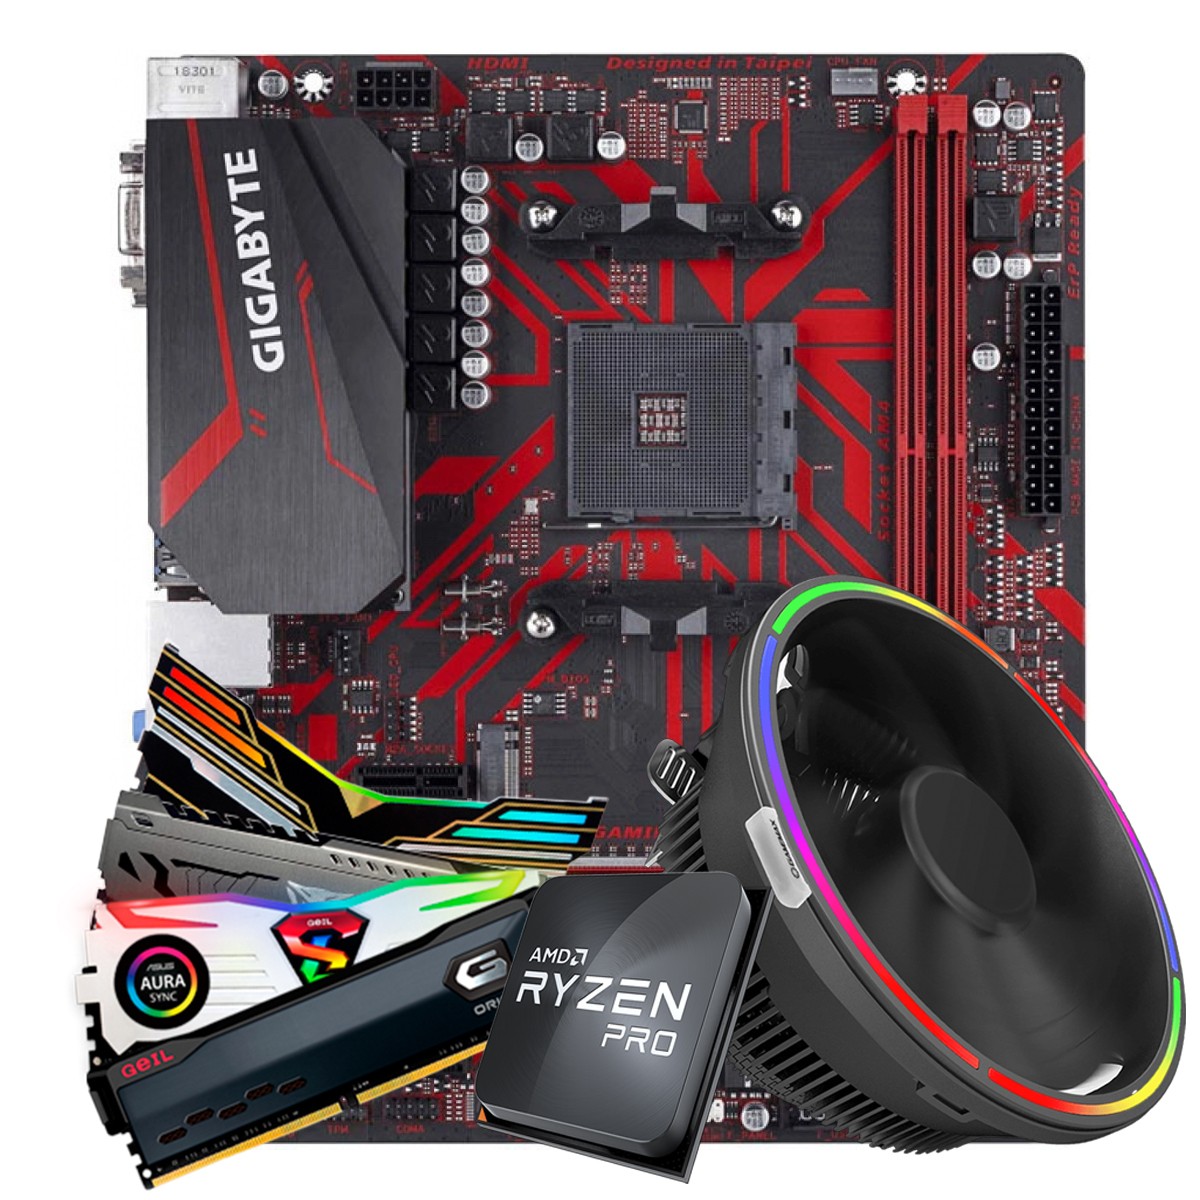 Kit Upgrade, AMD Ryzen 3 PRO 4350G + GIGABYTE B450M GAMING + Memória DDR4 16GB (2x8GB) 3000MHz